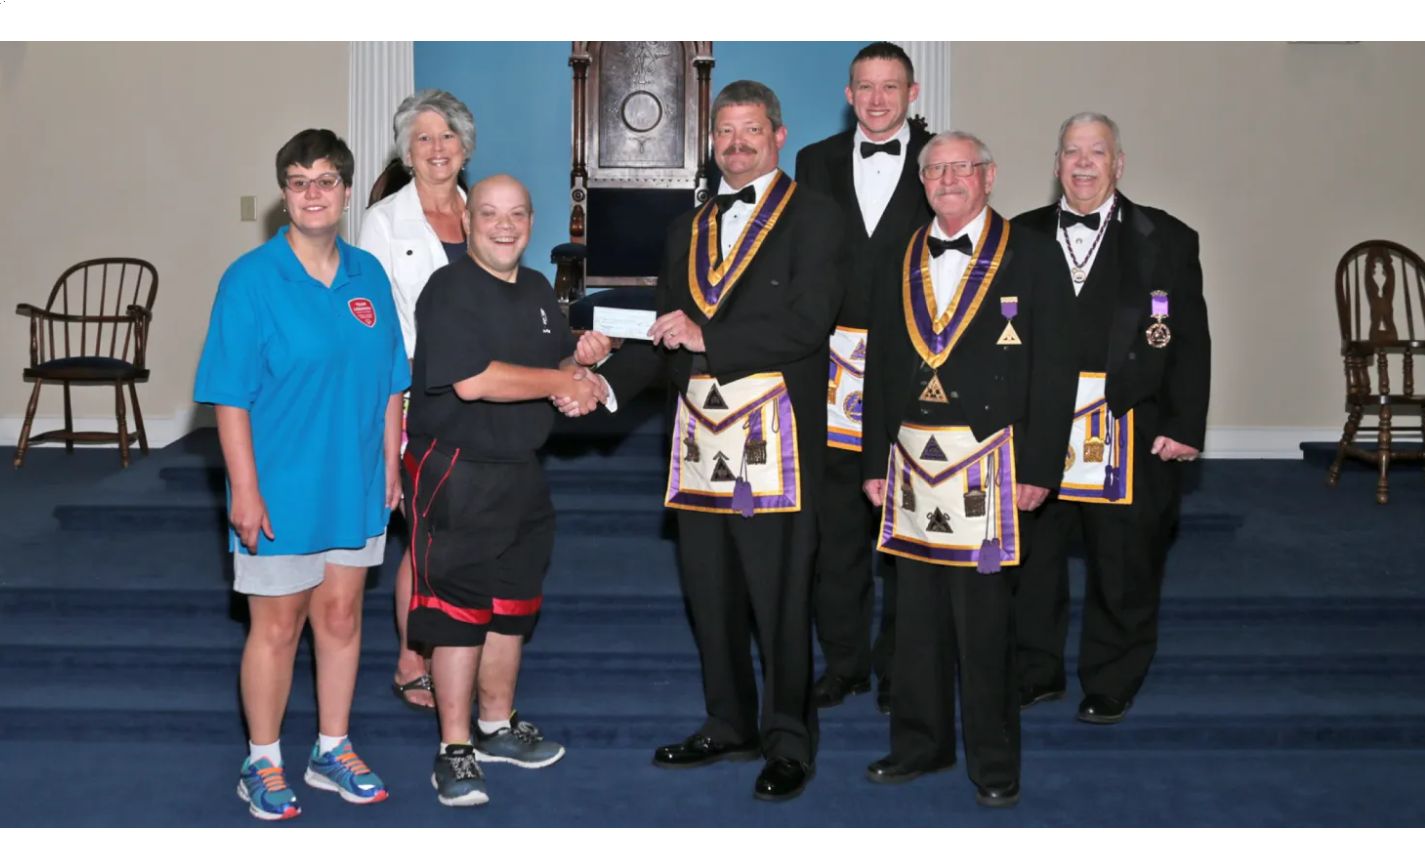 Pennsylvania/US - Lebanon Masonic Council No. 27 donates $1,000 to Special Olympics for uniforms